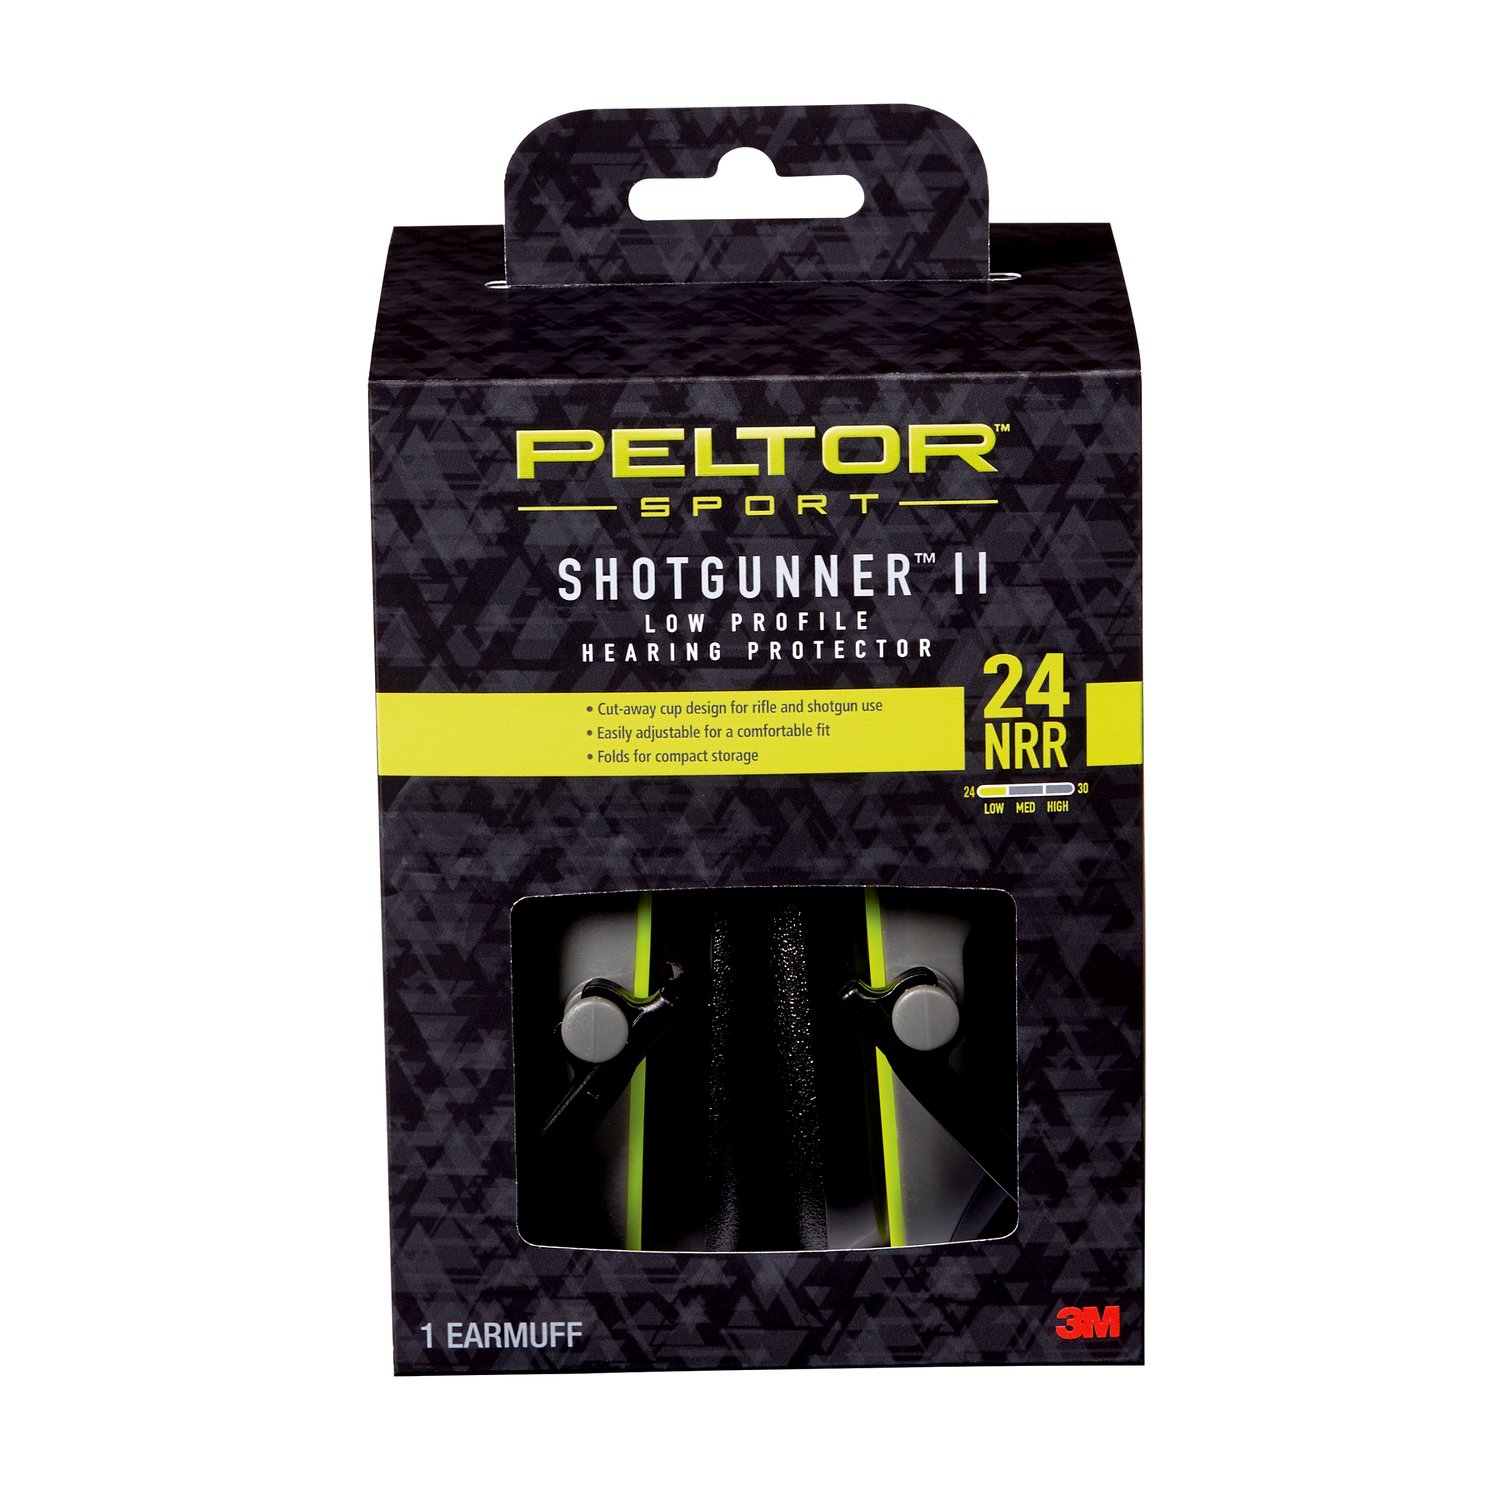 7100115570 - Peltor Sport Shotgunner II Low-Profile Hearing Protector 24 NRR,
97040-PEL-2C, Black/Gray, 2ea/cs